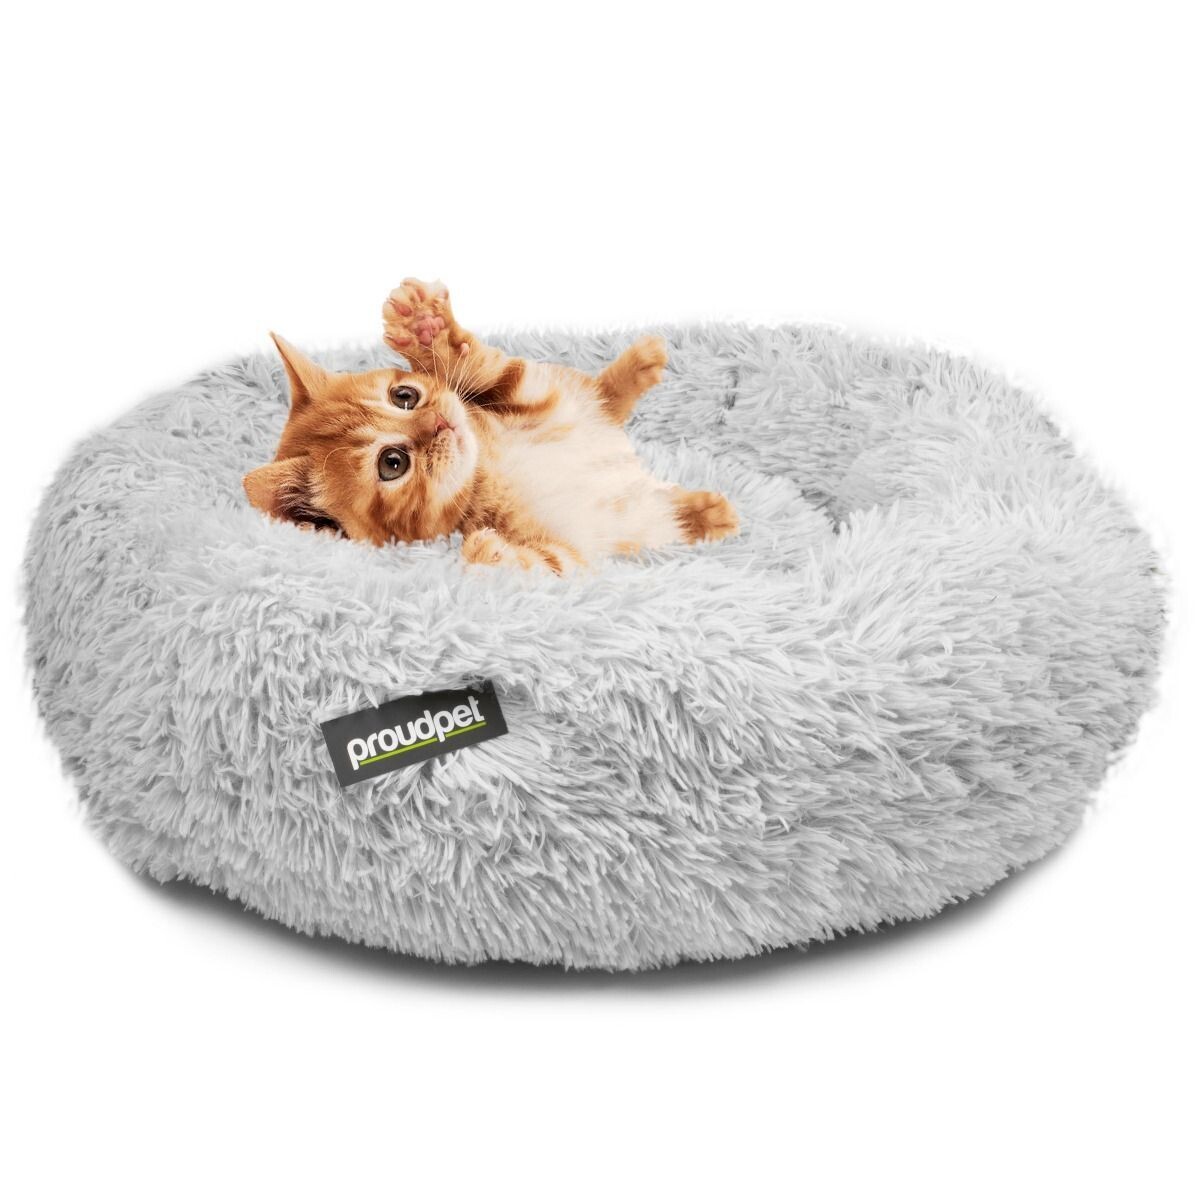 Petbeddingstore: Large Cat Donut Bed (Ref: 6281)